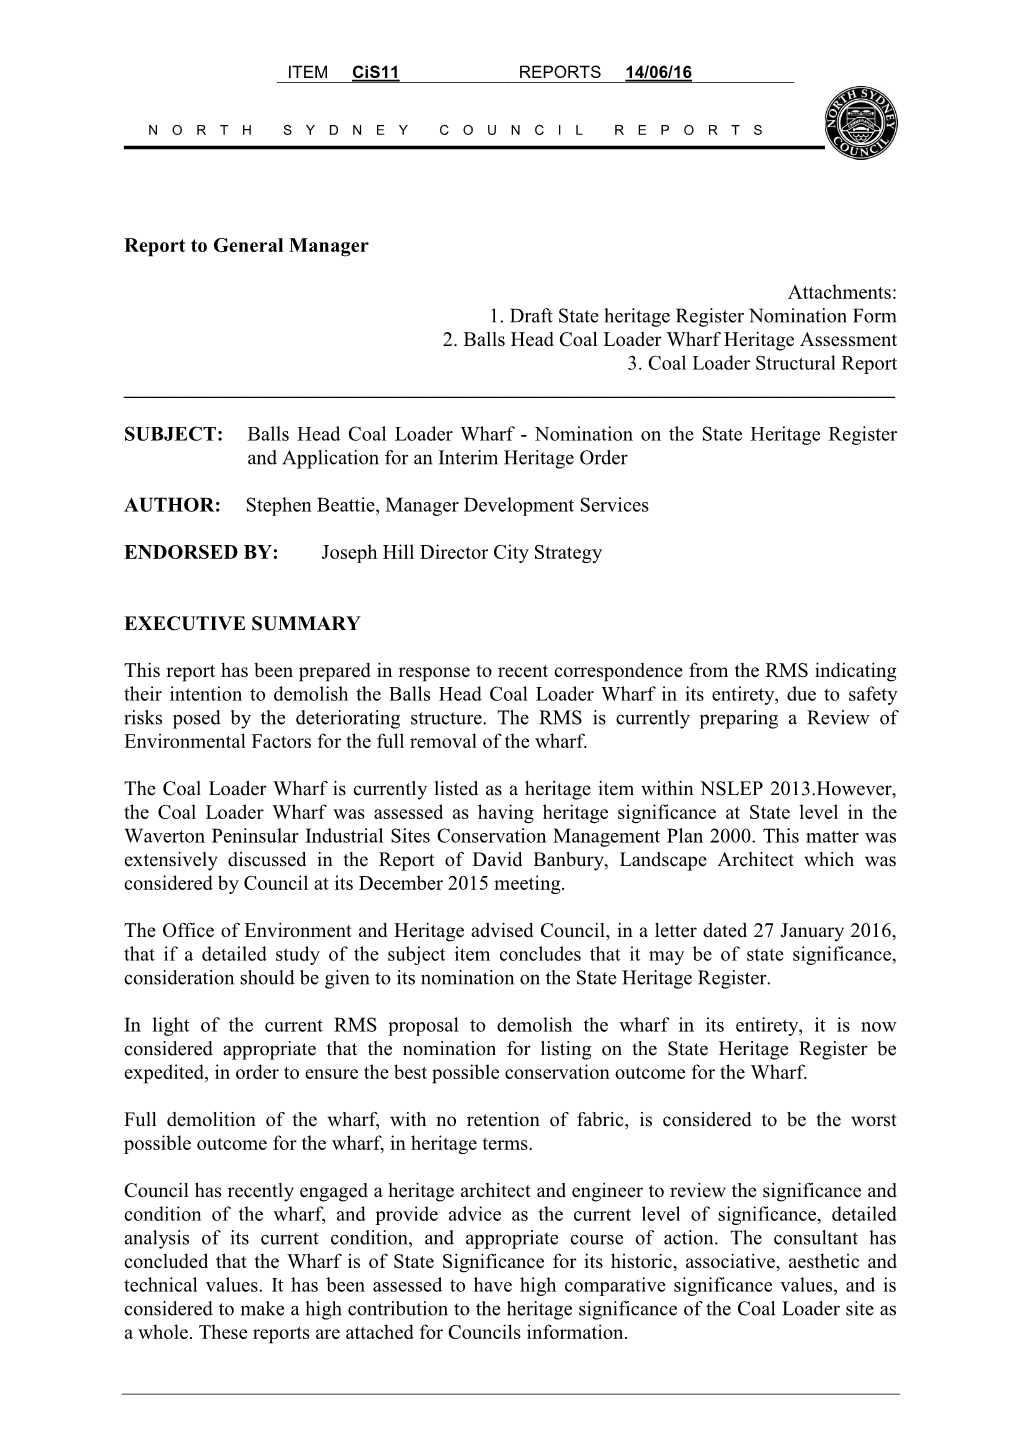 1. Draft State Heritage Register Nomination Form 2. Balls Head Coal Loader Wharf Heritage Assessment 3